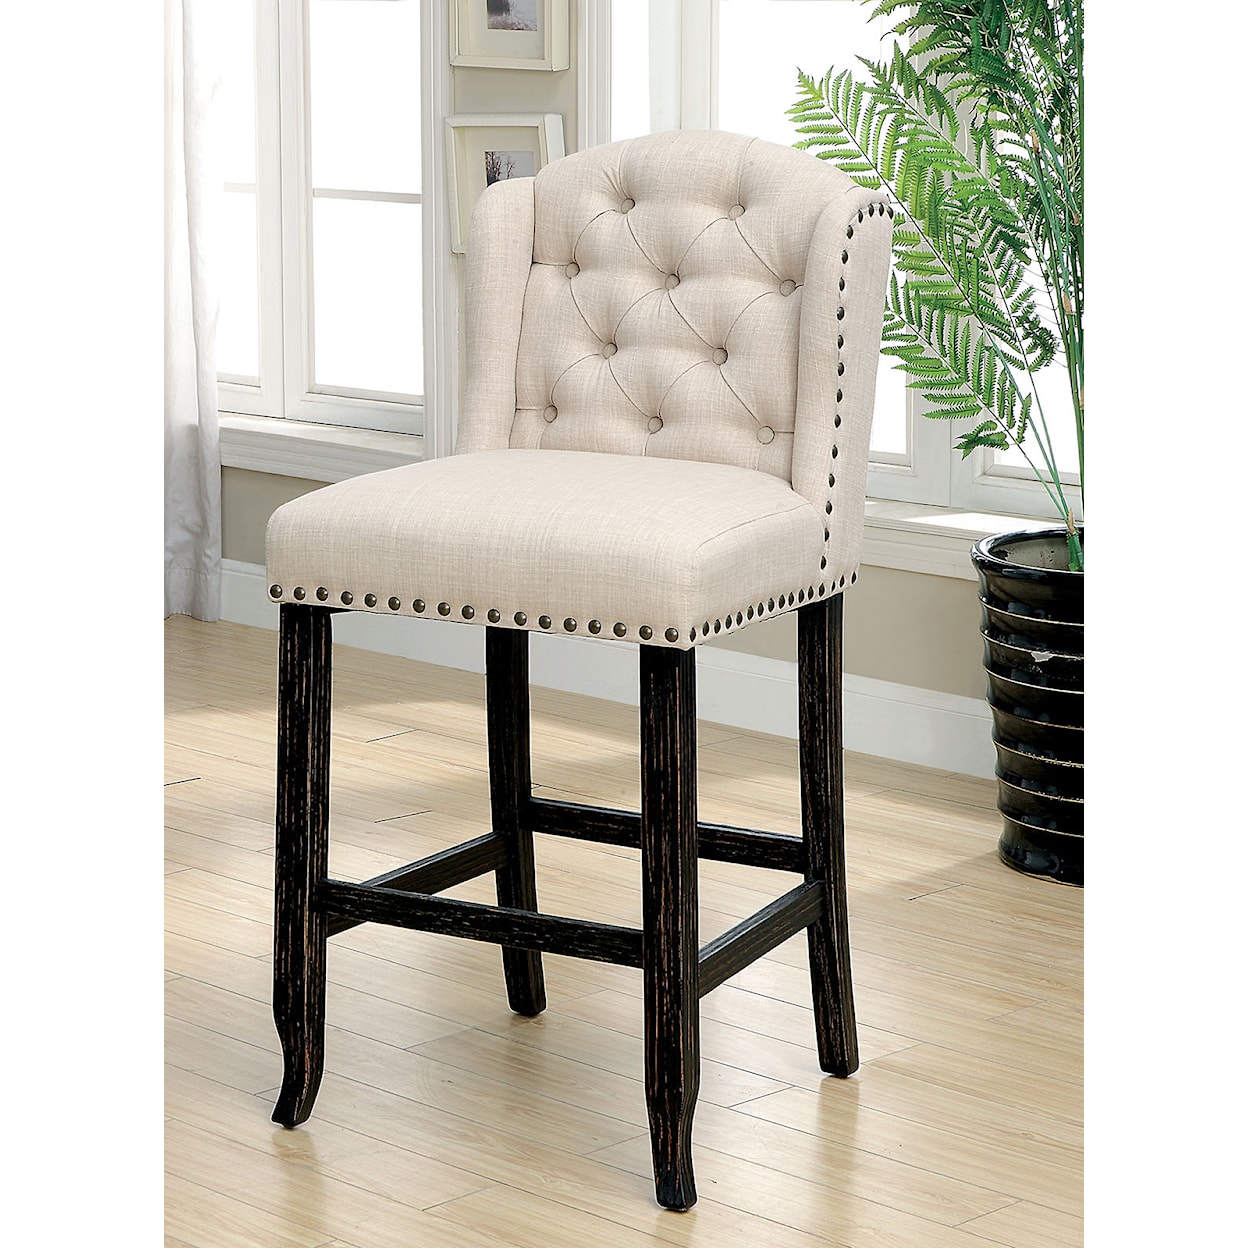 Furniture of America Sania III Wing Back Bar Height Chair